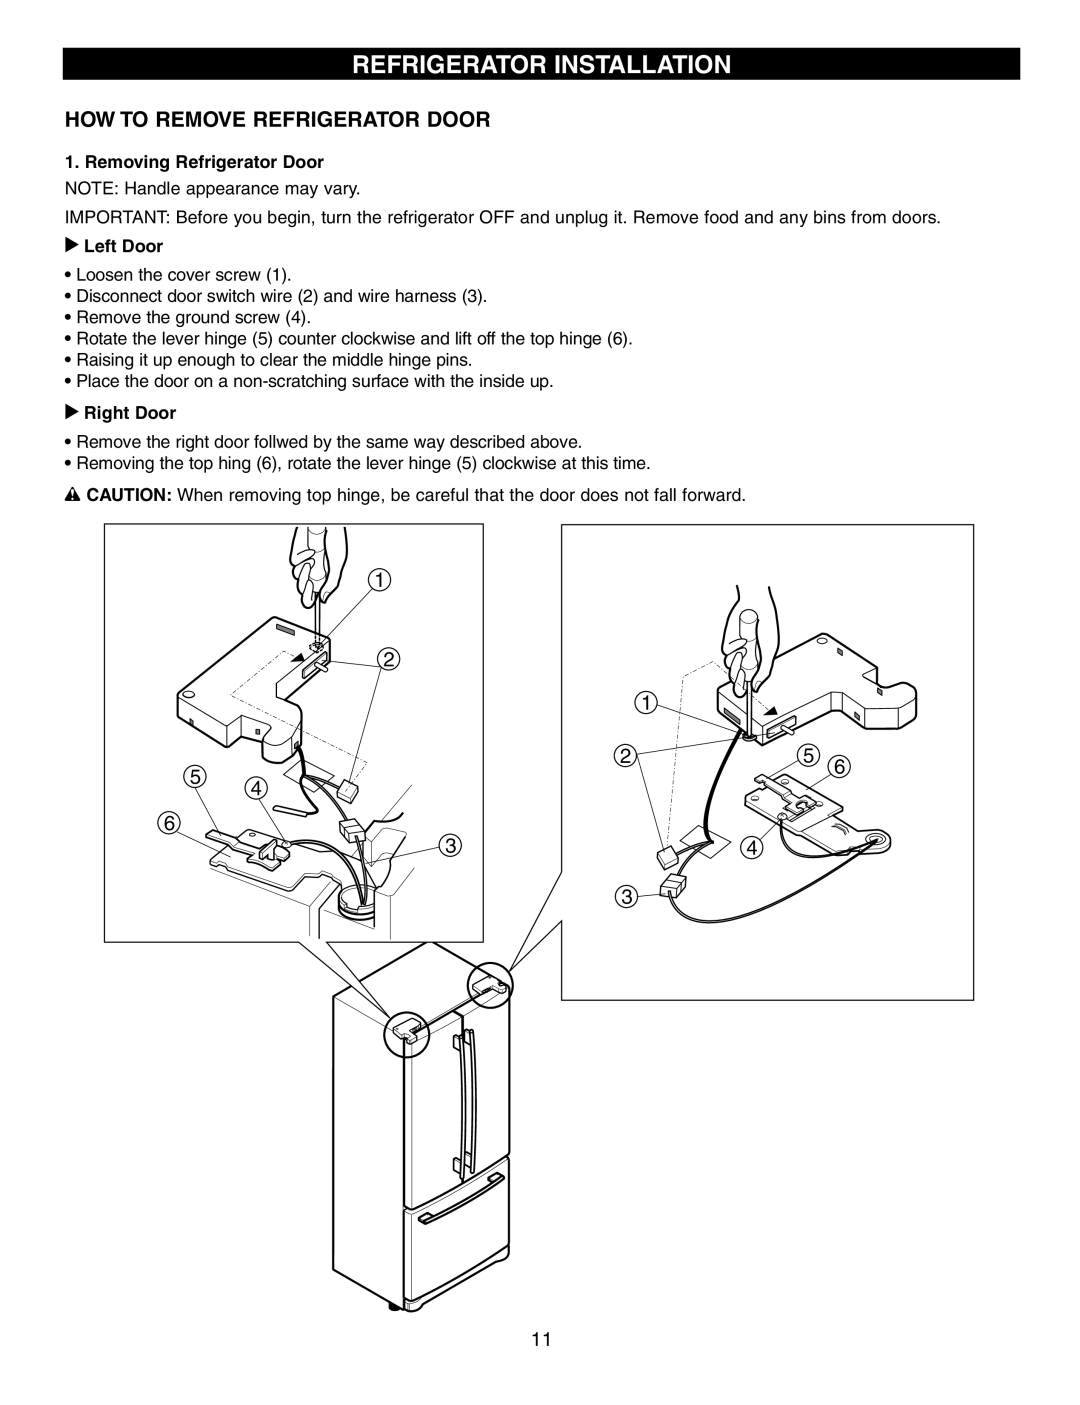 LG Electronics LFC25760 manual Refrigerator Installation, How To Remove Refrigerator Door, Removing Refrigerator Door 